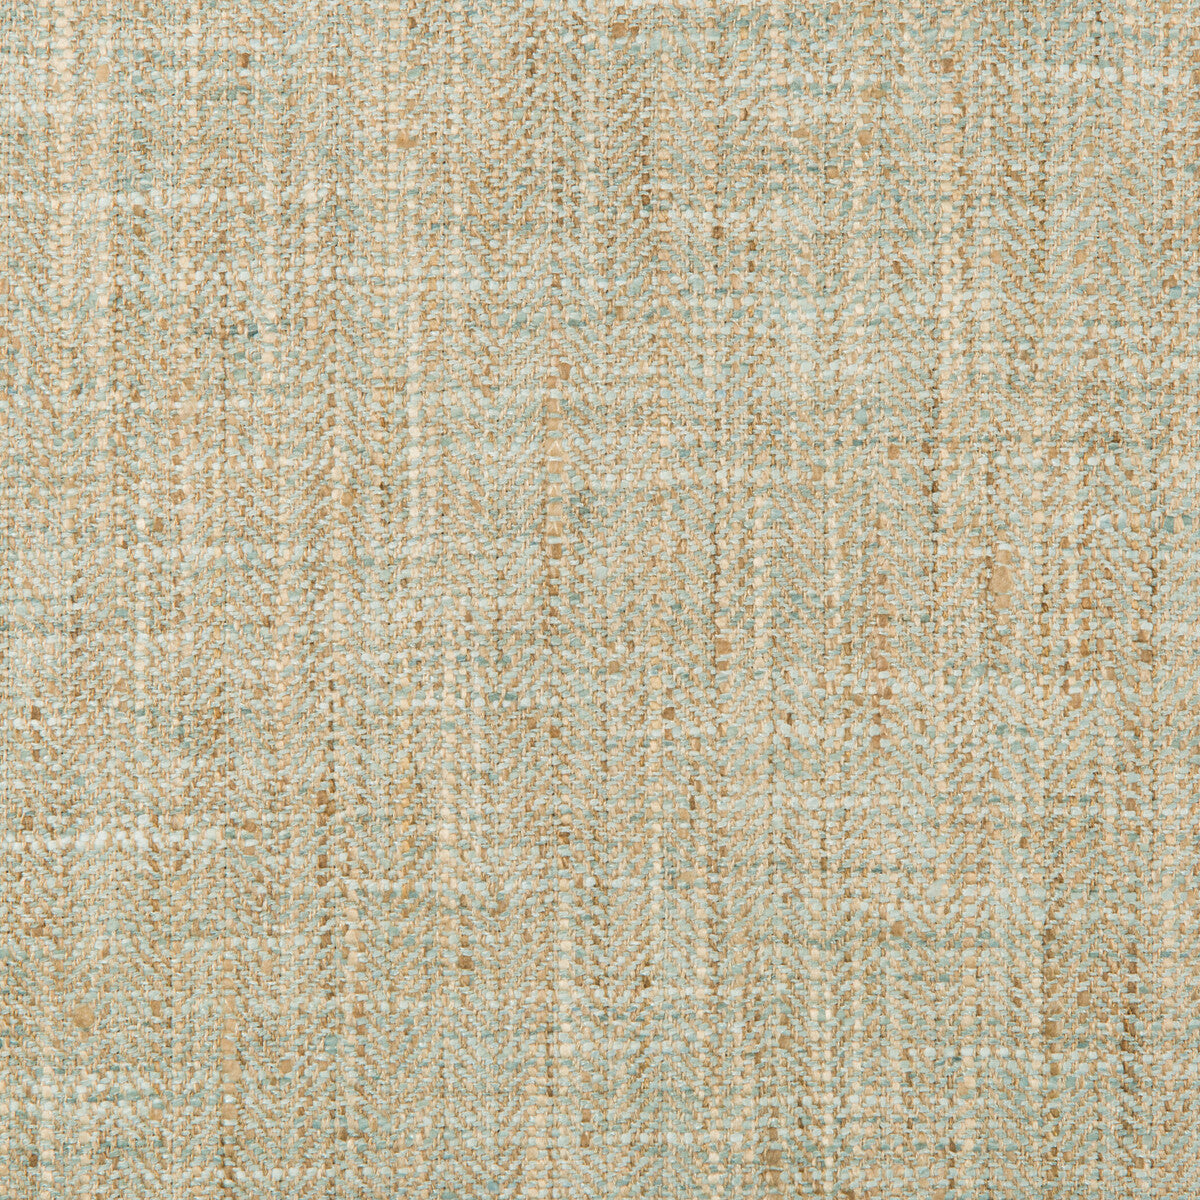 Kravet Smart fabric in 34088-1623 color - pattern 34088.1623.0 - by Kravet Smart